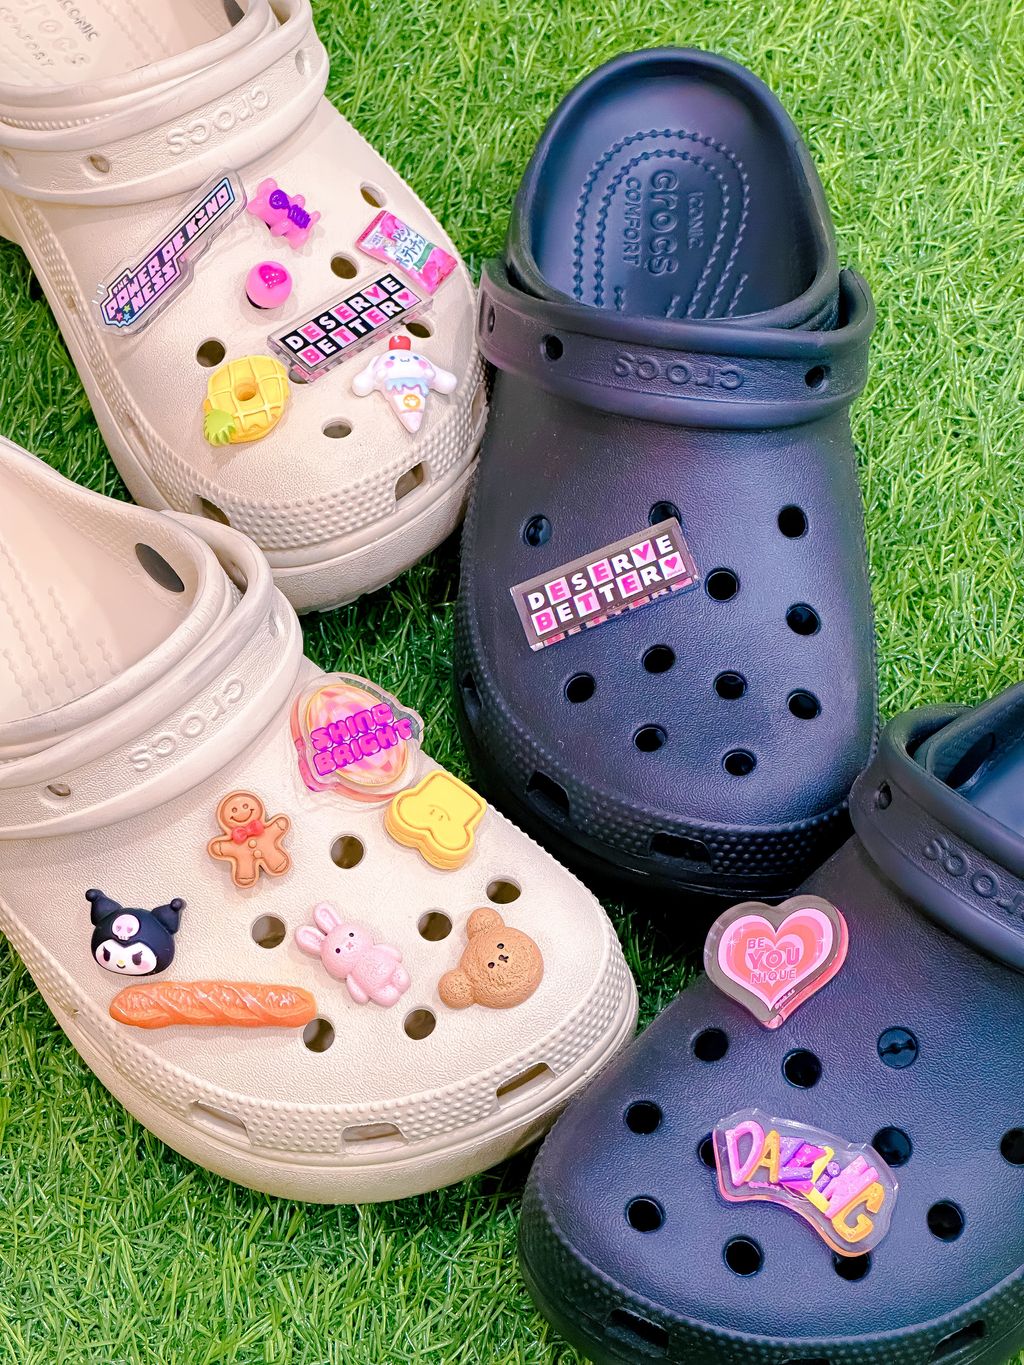 croc shoe charms